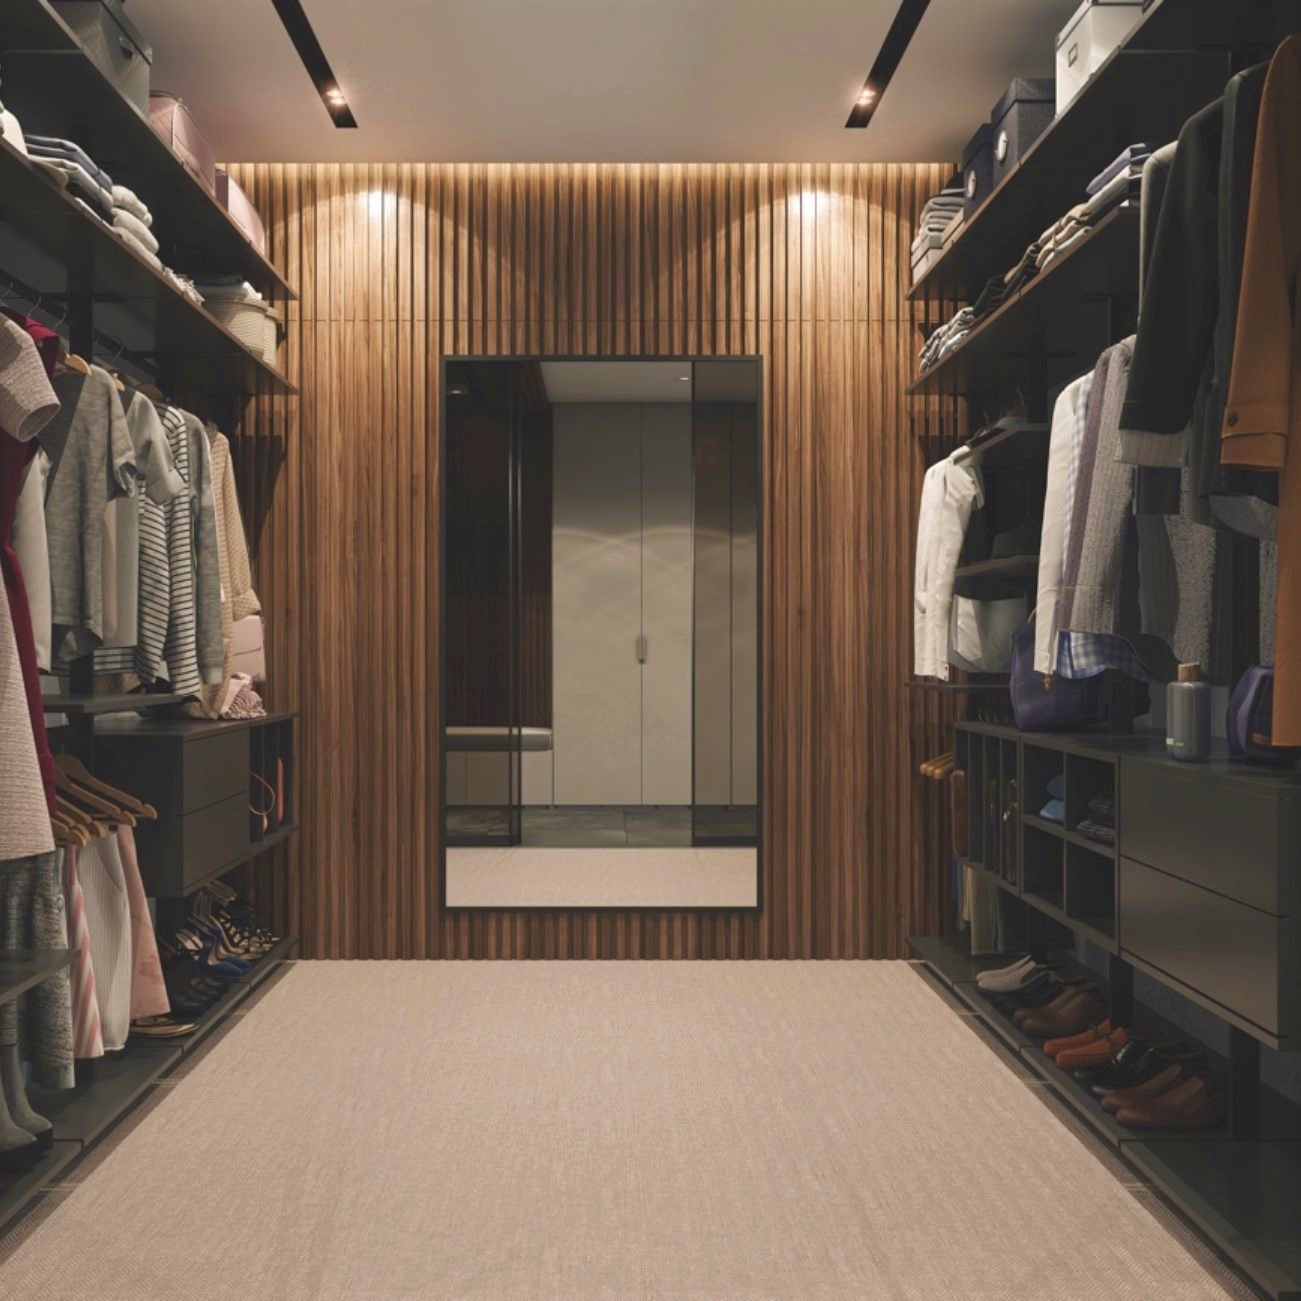 Luxurious Design for Walk-in Closet